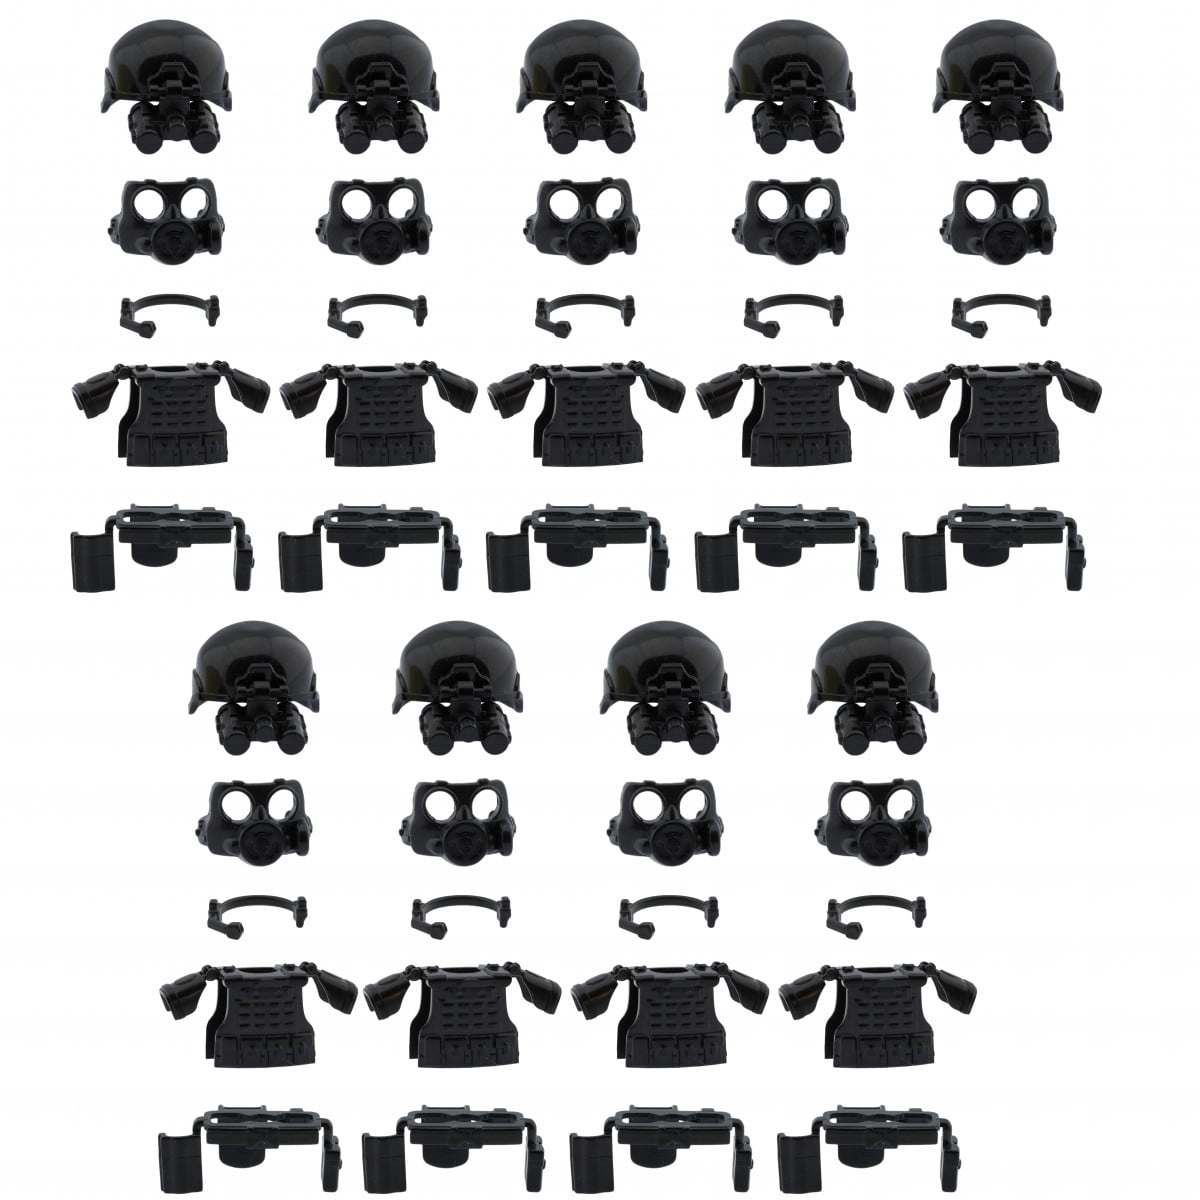 New 12 Custom LEGO Figures SWAT Minifigures plus Jeep Army Military Minifigs 